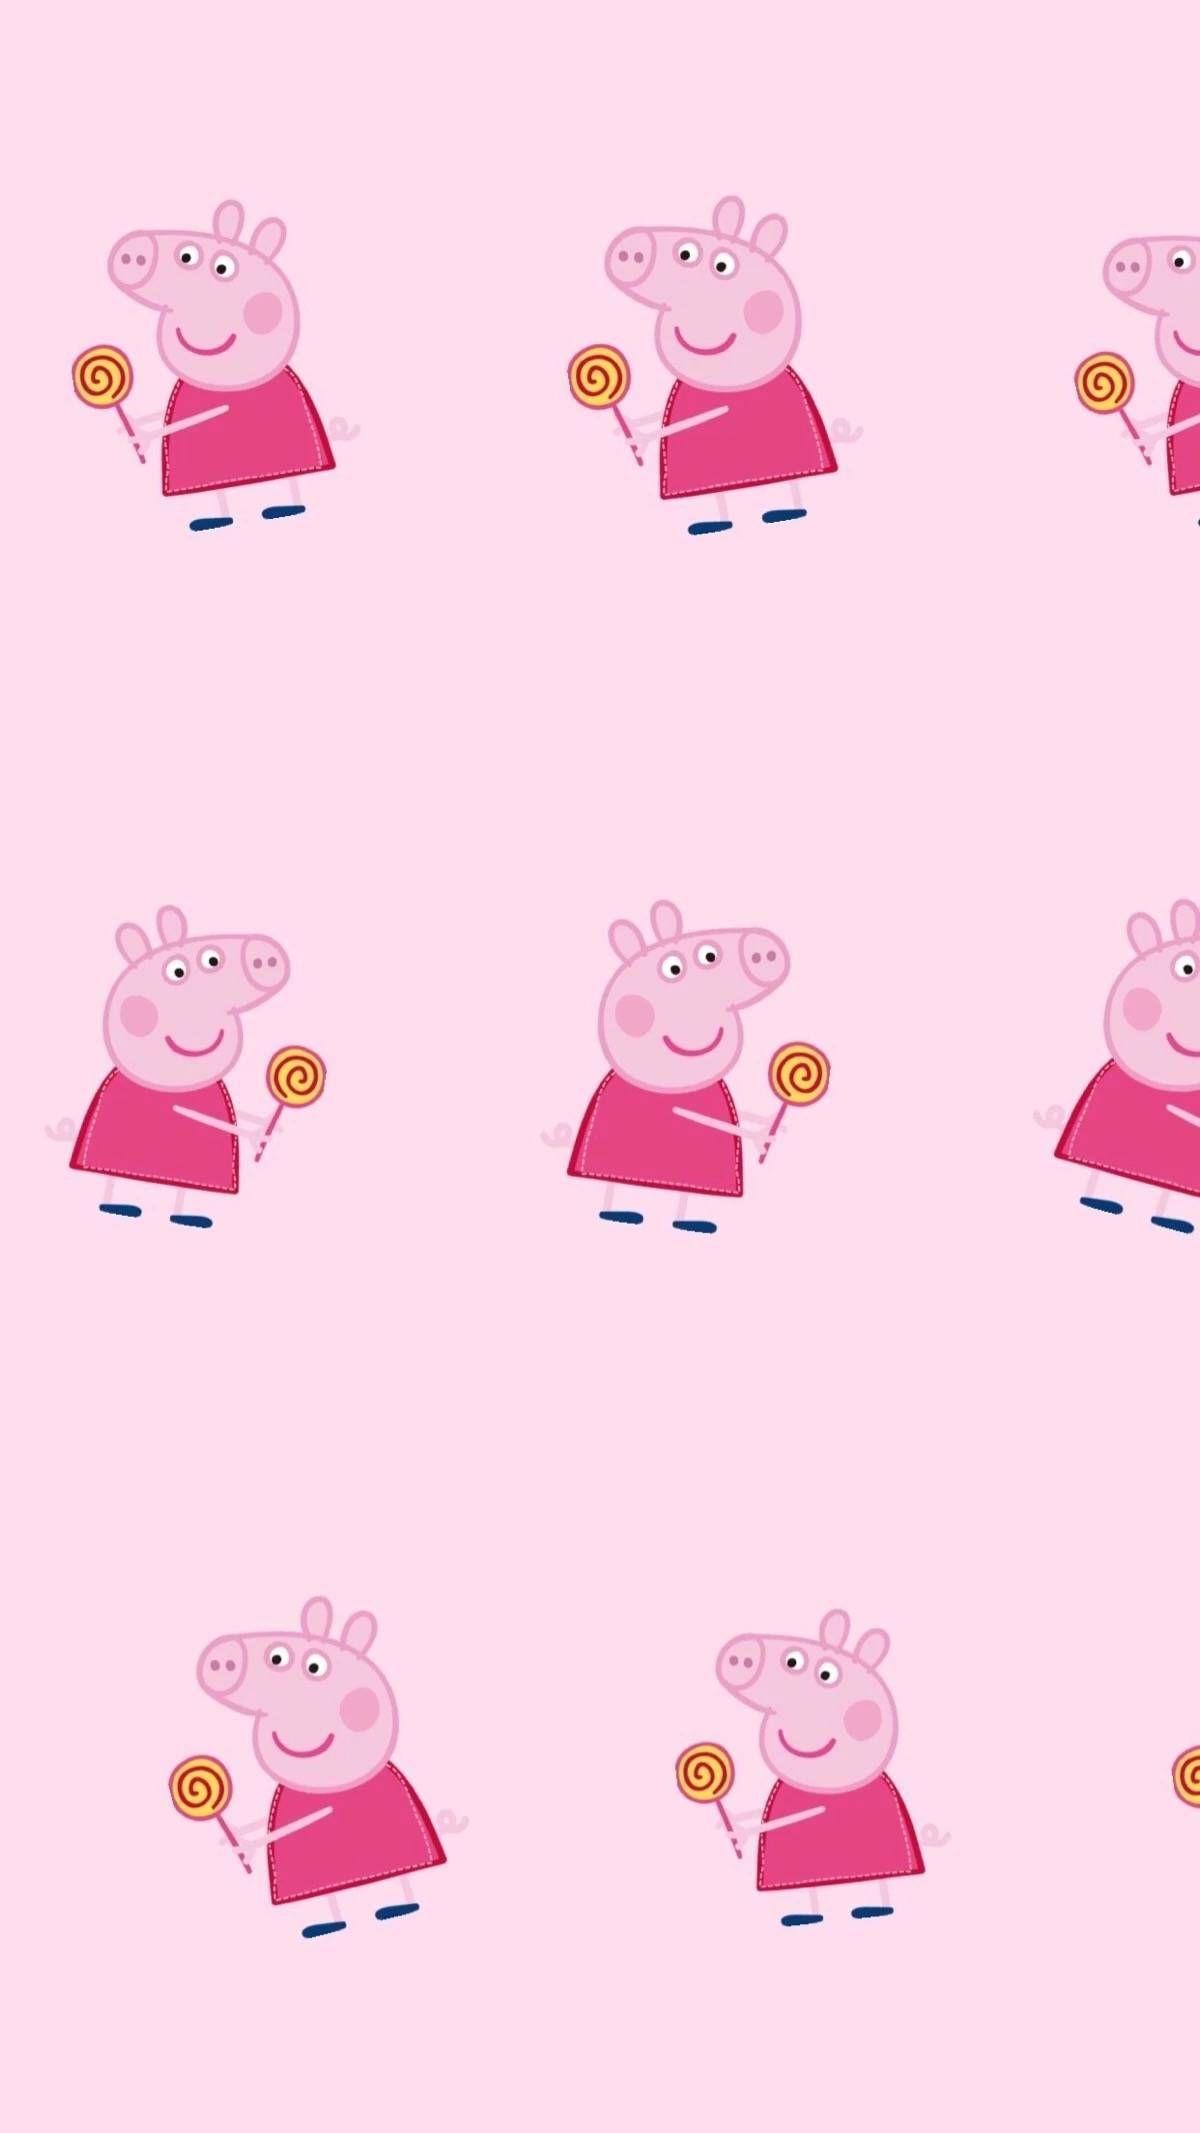 Peppa Pig Vsco Wallpapers Top Free Peppa Pig Vsco Backgrounds